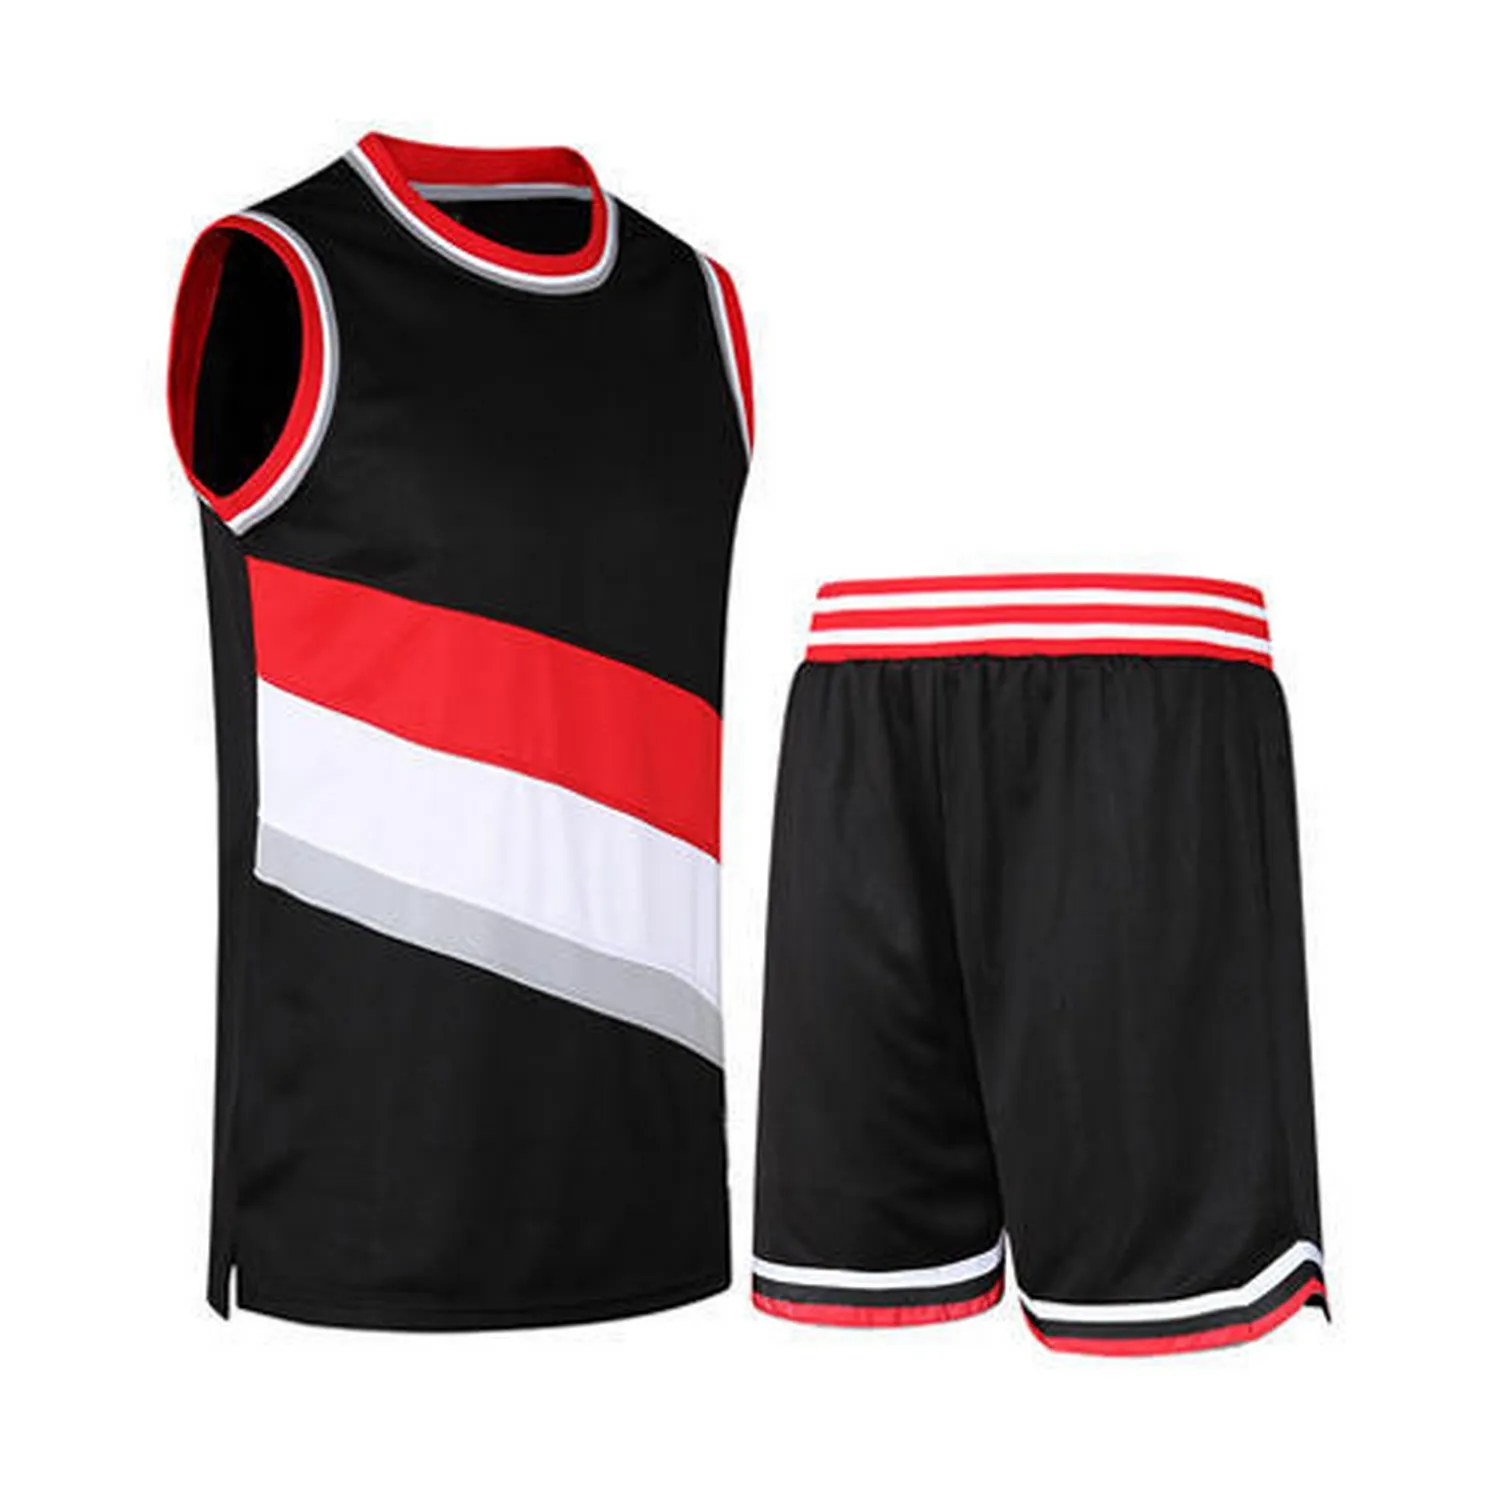 oem odm mens women sports basketball jersey shirt dresses with custom design Basketball Uniforms